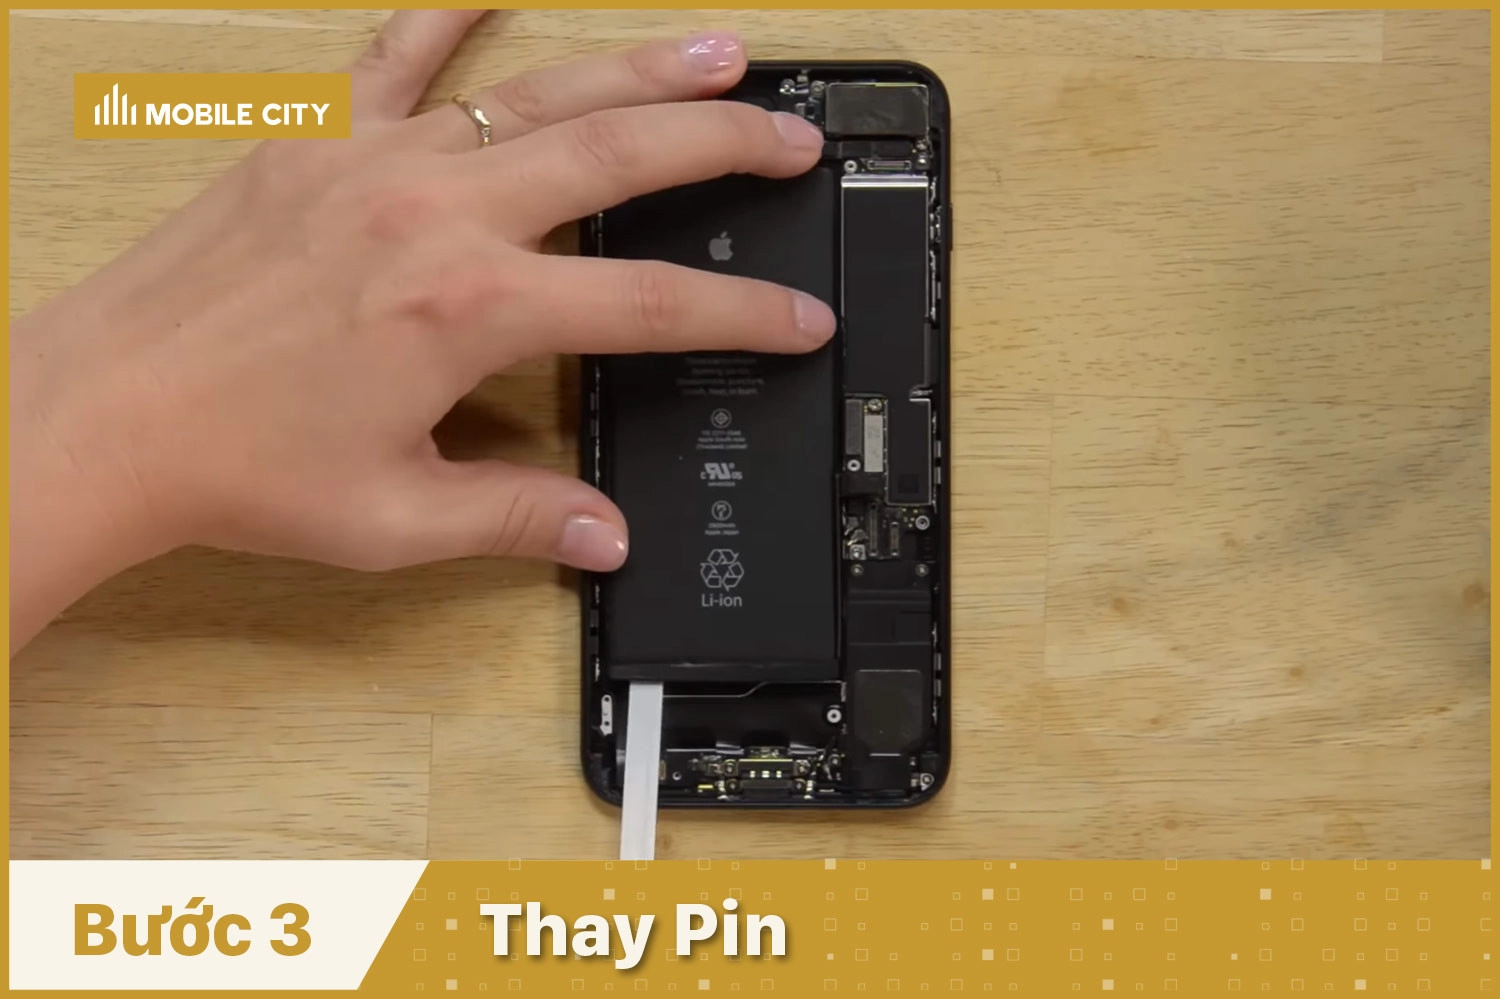 Thay Pin iPhone 7 Plus, thay Pin